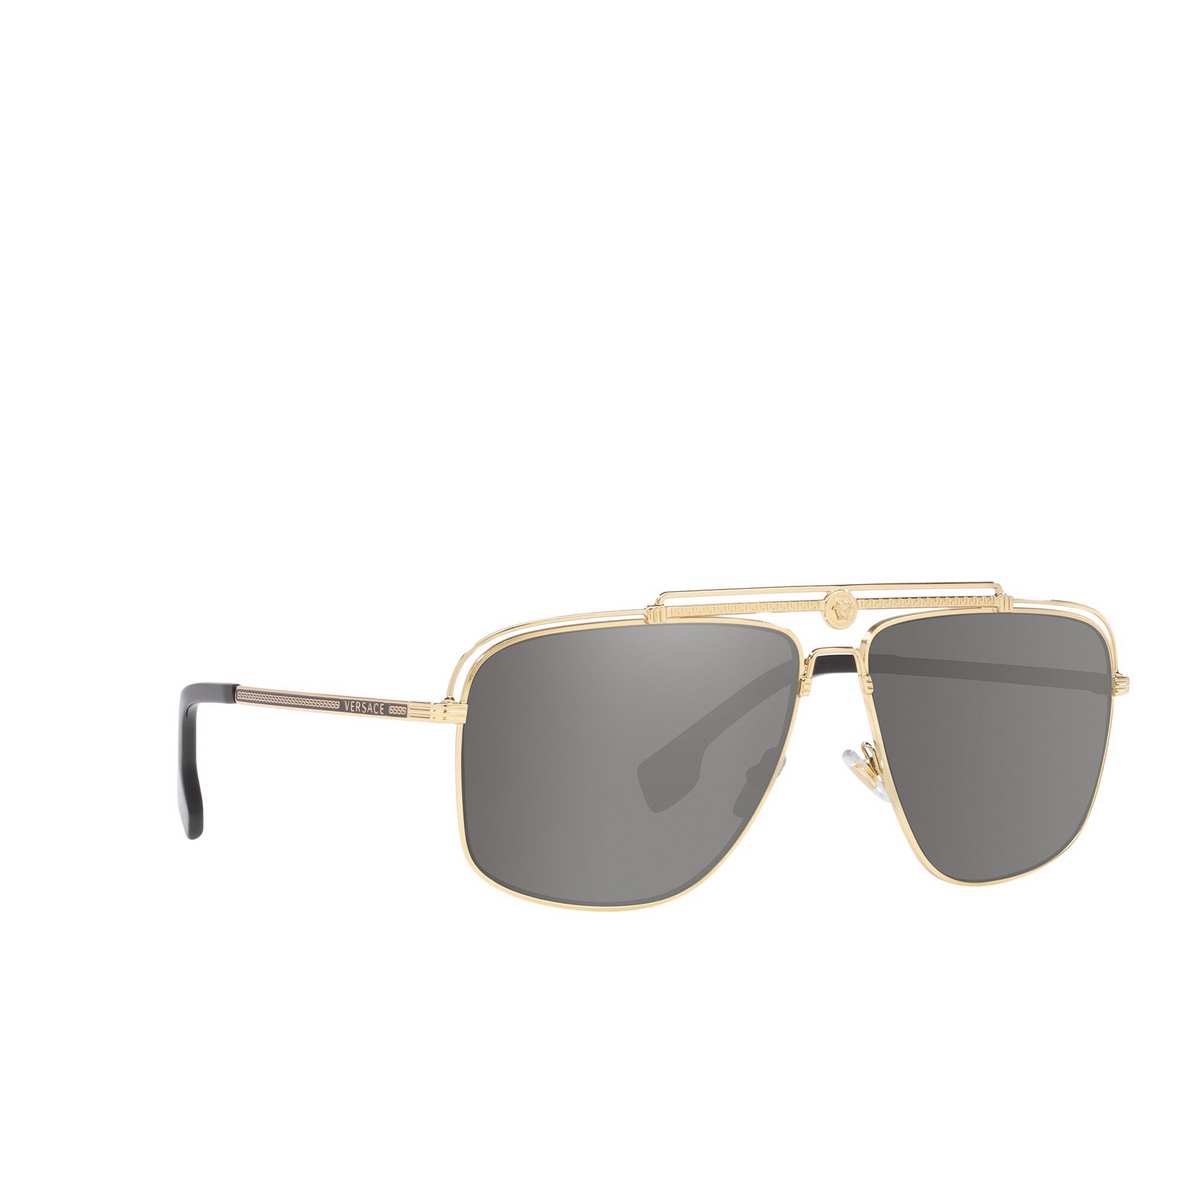 Versace® Square Sunglasses: VE2242 color Pale Gold 12526G - three-quarters view.